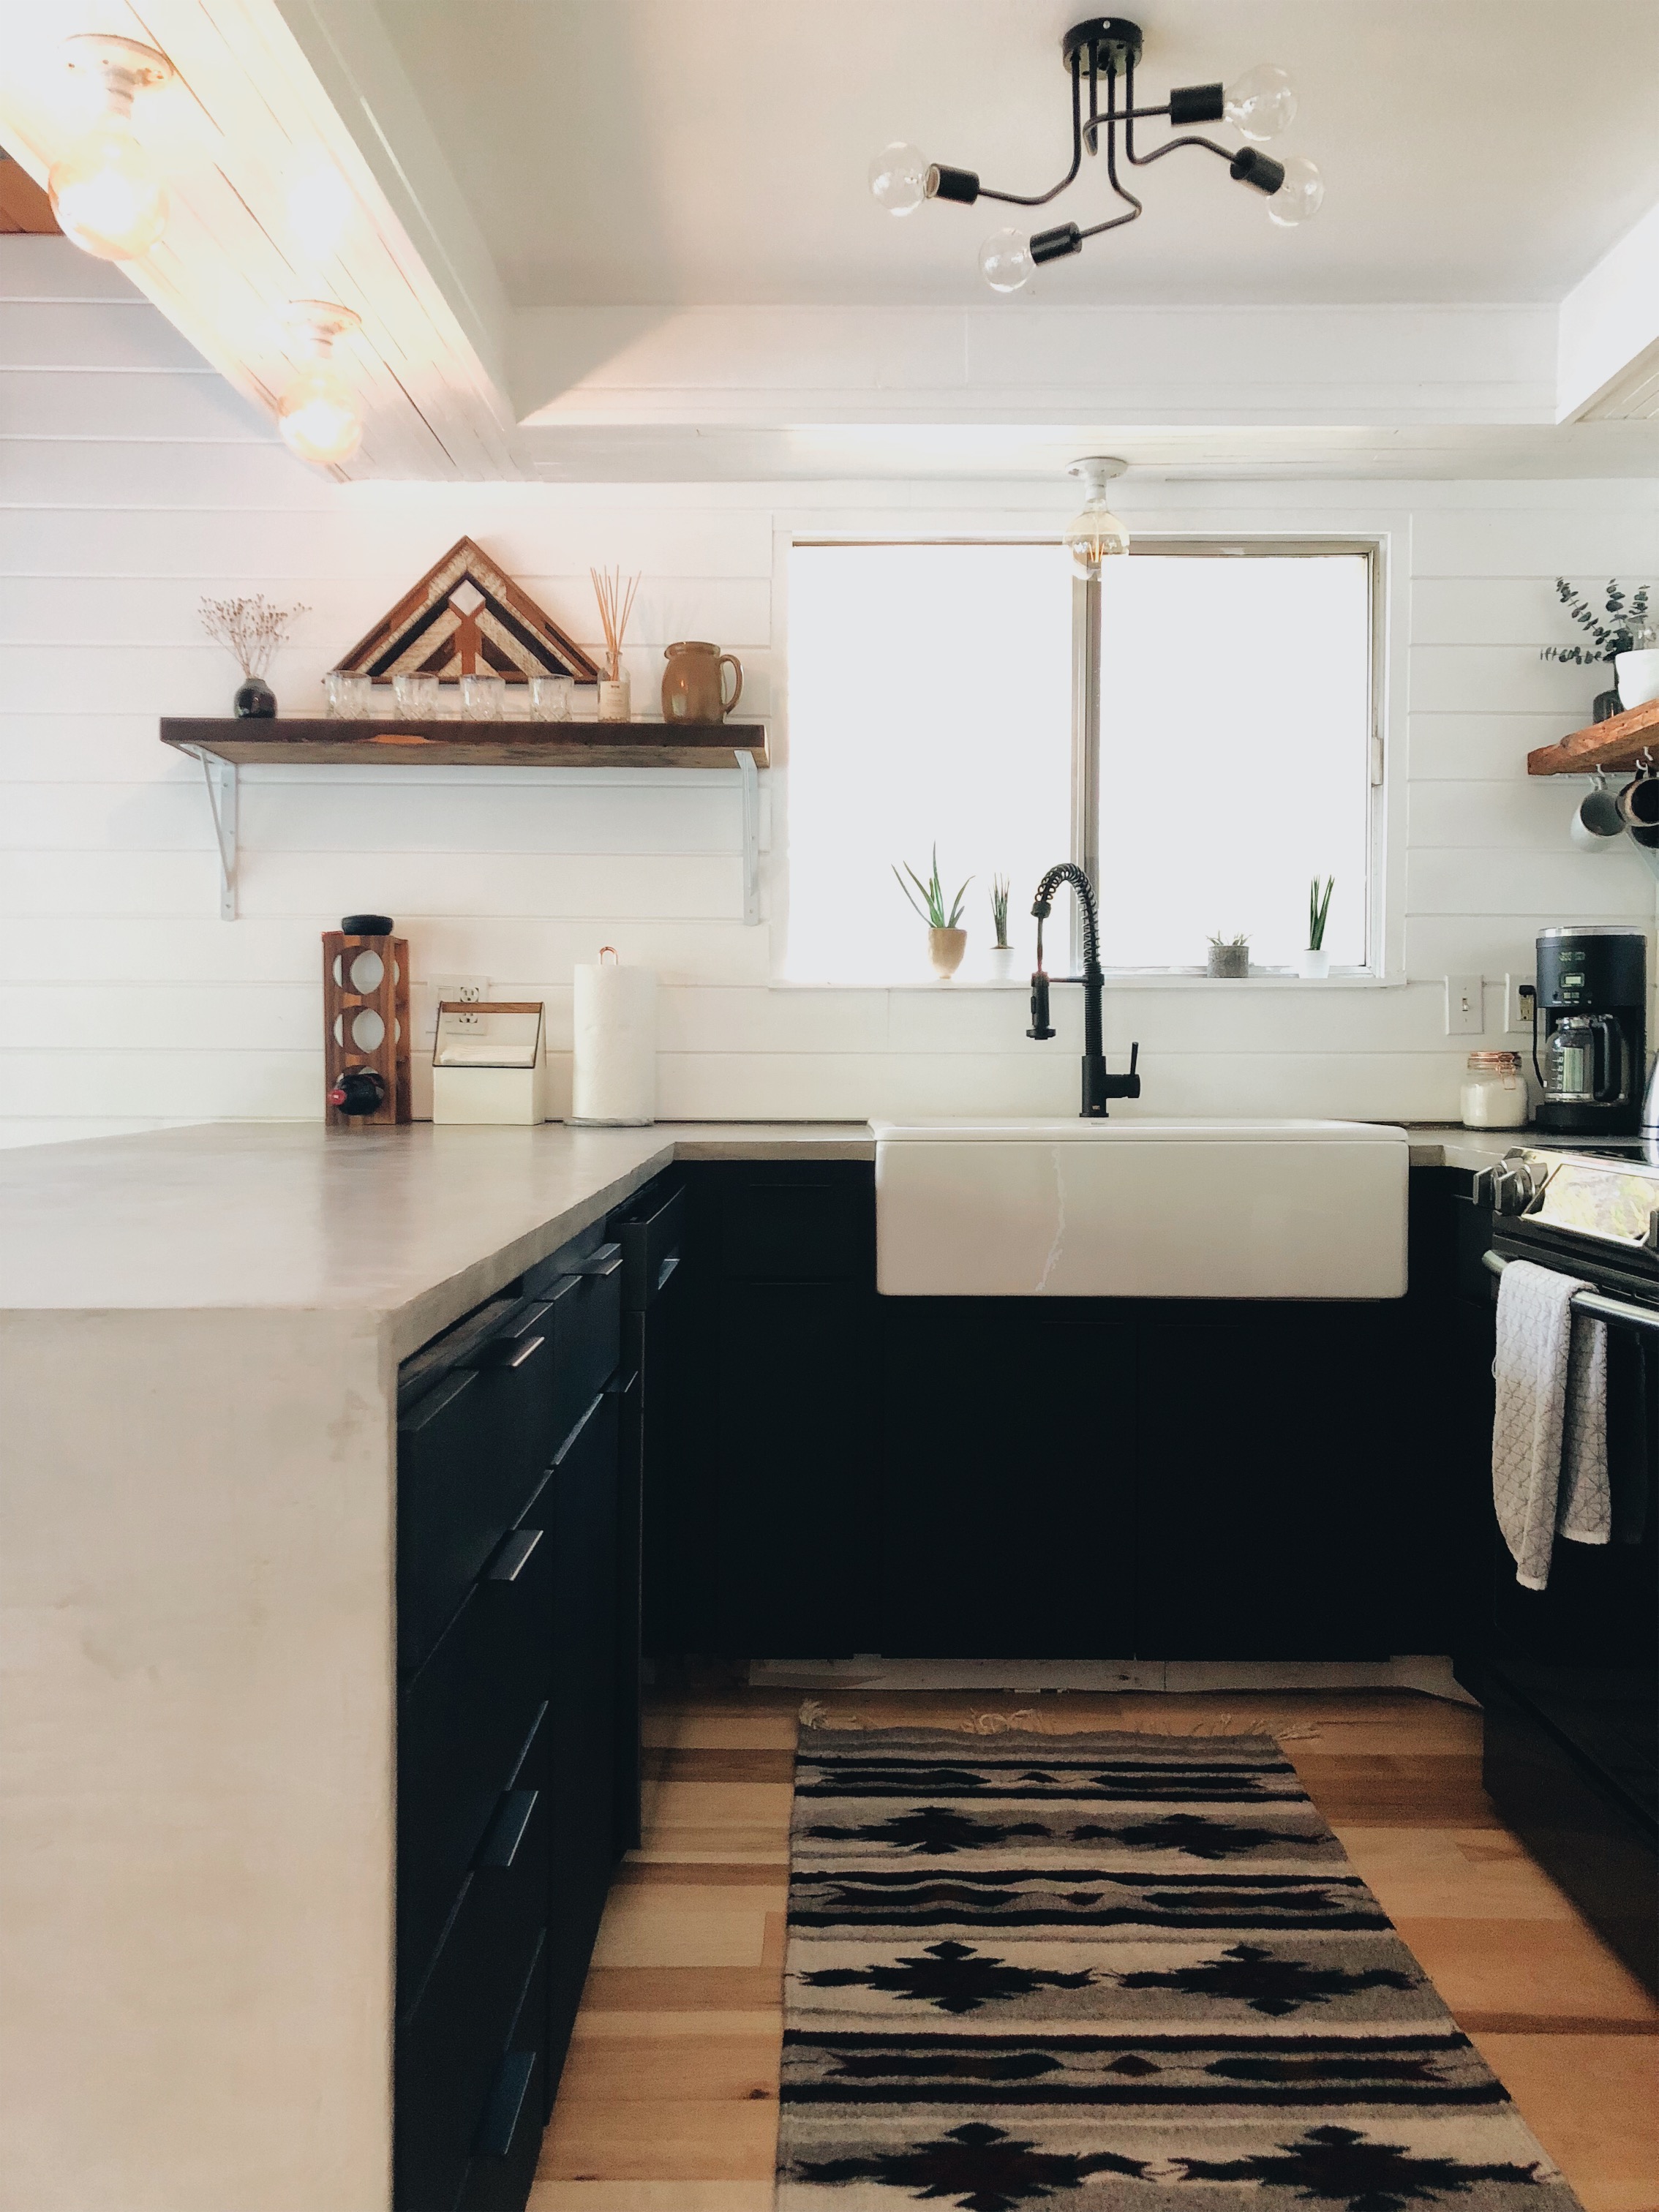  UNIQUE OPEN PLAN KITCHEN LAYOUT IDEAS FOR 2020 | VIGO Industries - Kitchen Sinks and Faucets Design Ideas - Home Interior 